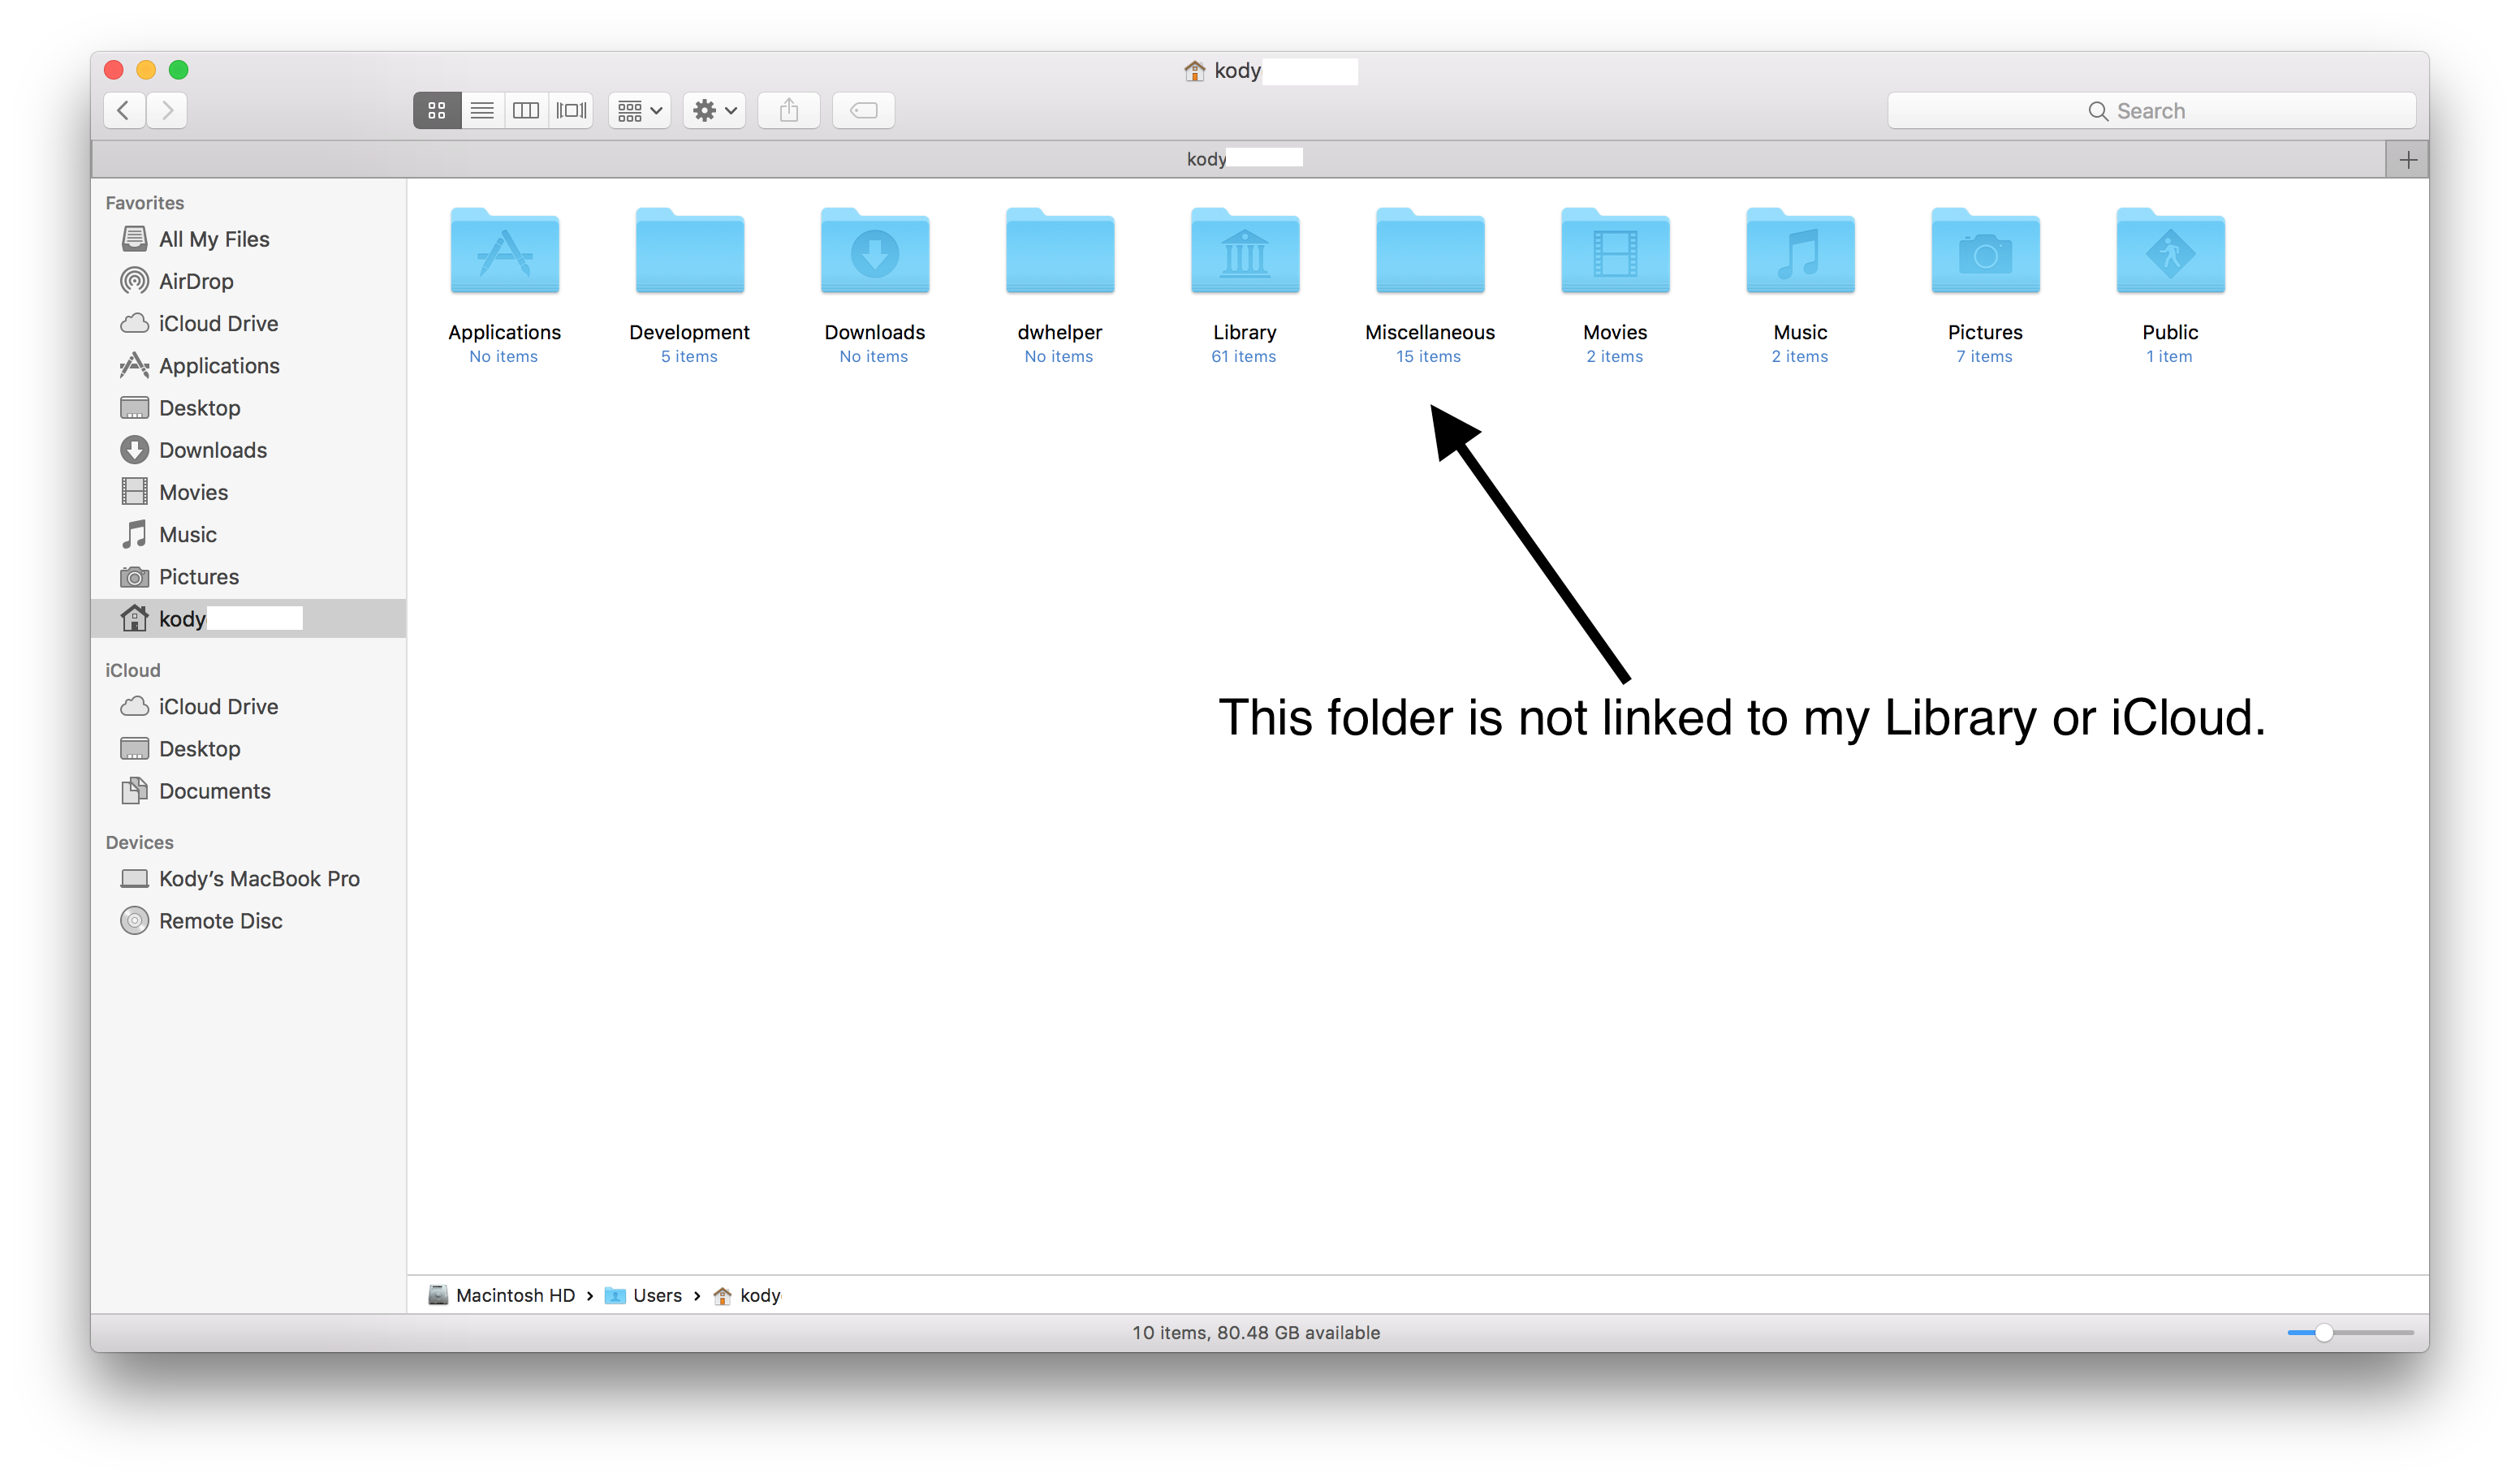 Come rimuovo i file da iCloud ma tenerli su Mac?